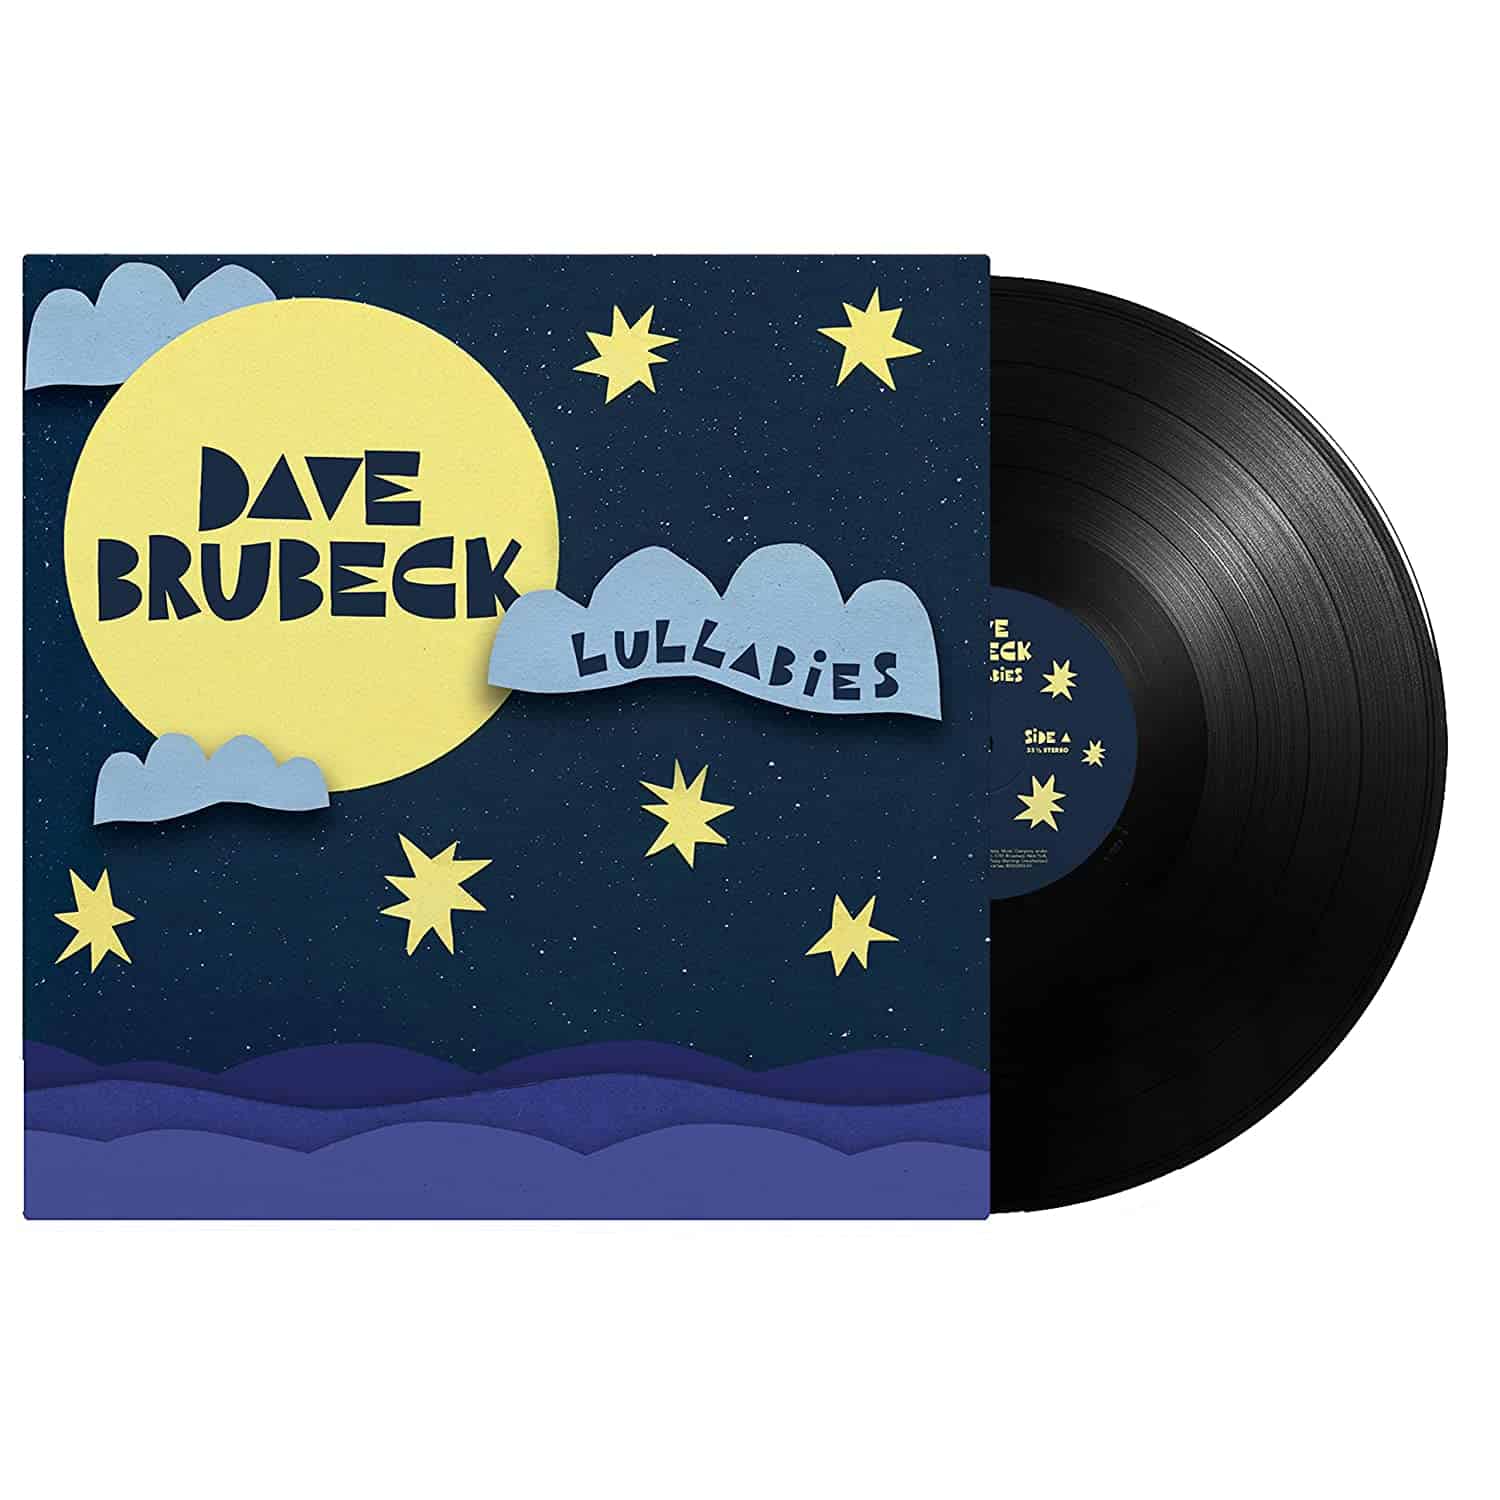 dave-brubeck-lullabies-vinyl-record-album-1